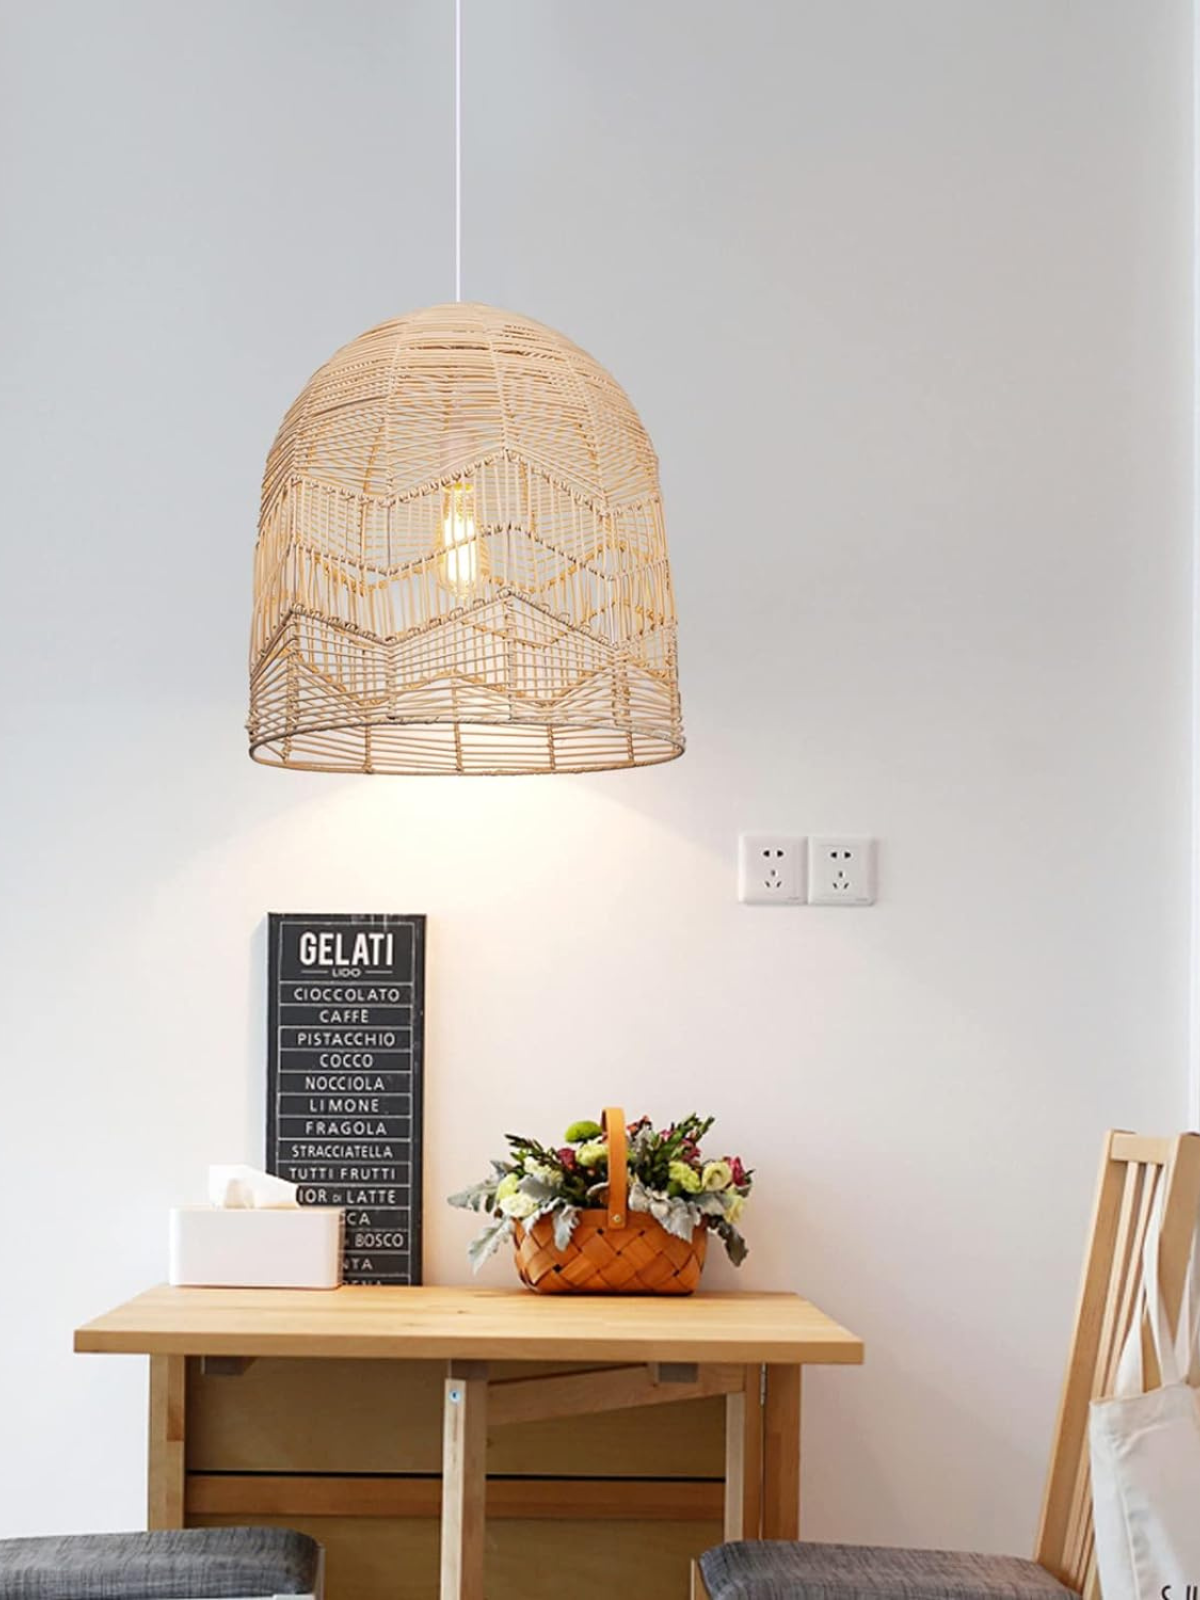 Weaving Natural Rattan Pendant Lighting Rope Lamp Shade Indoor Hanging Ceiling Light Fixture Handmade Lampshade